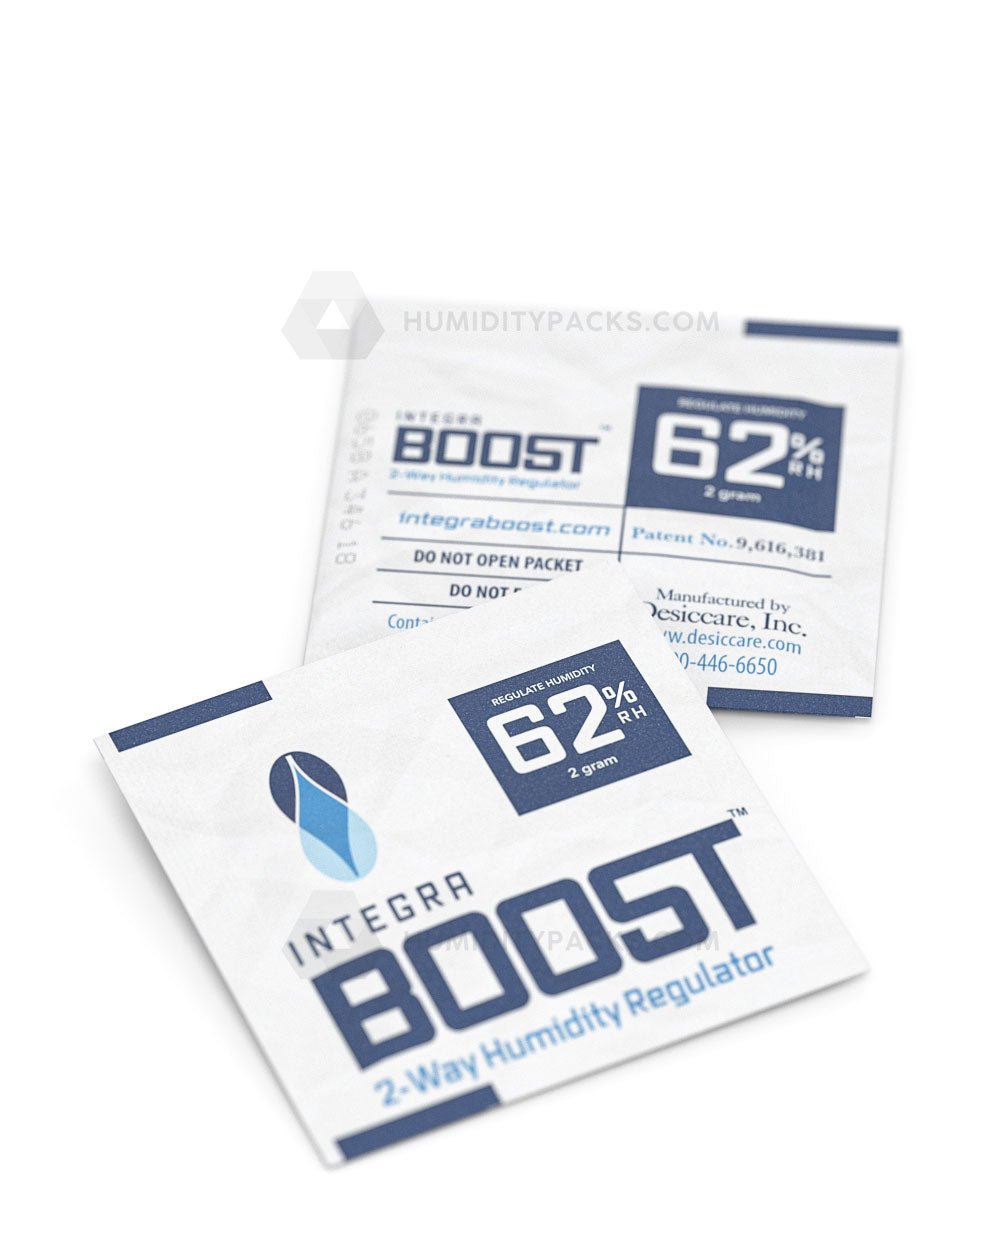 Integra Boost 2 Gram 62% 2-Way Humidity Packs 100/Box Humidity Packs - 5